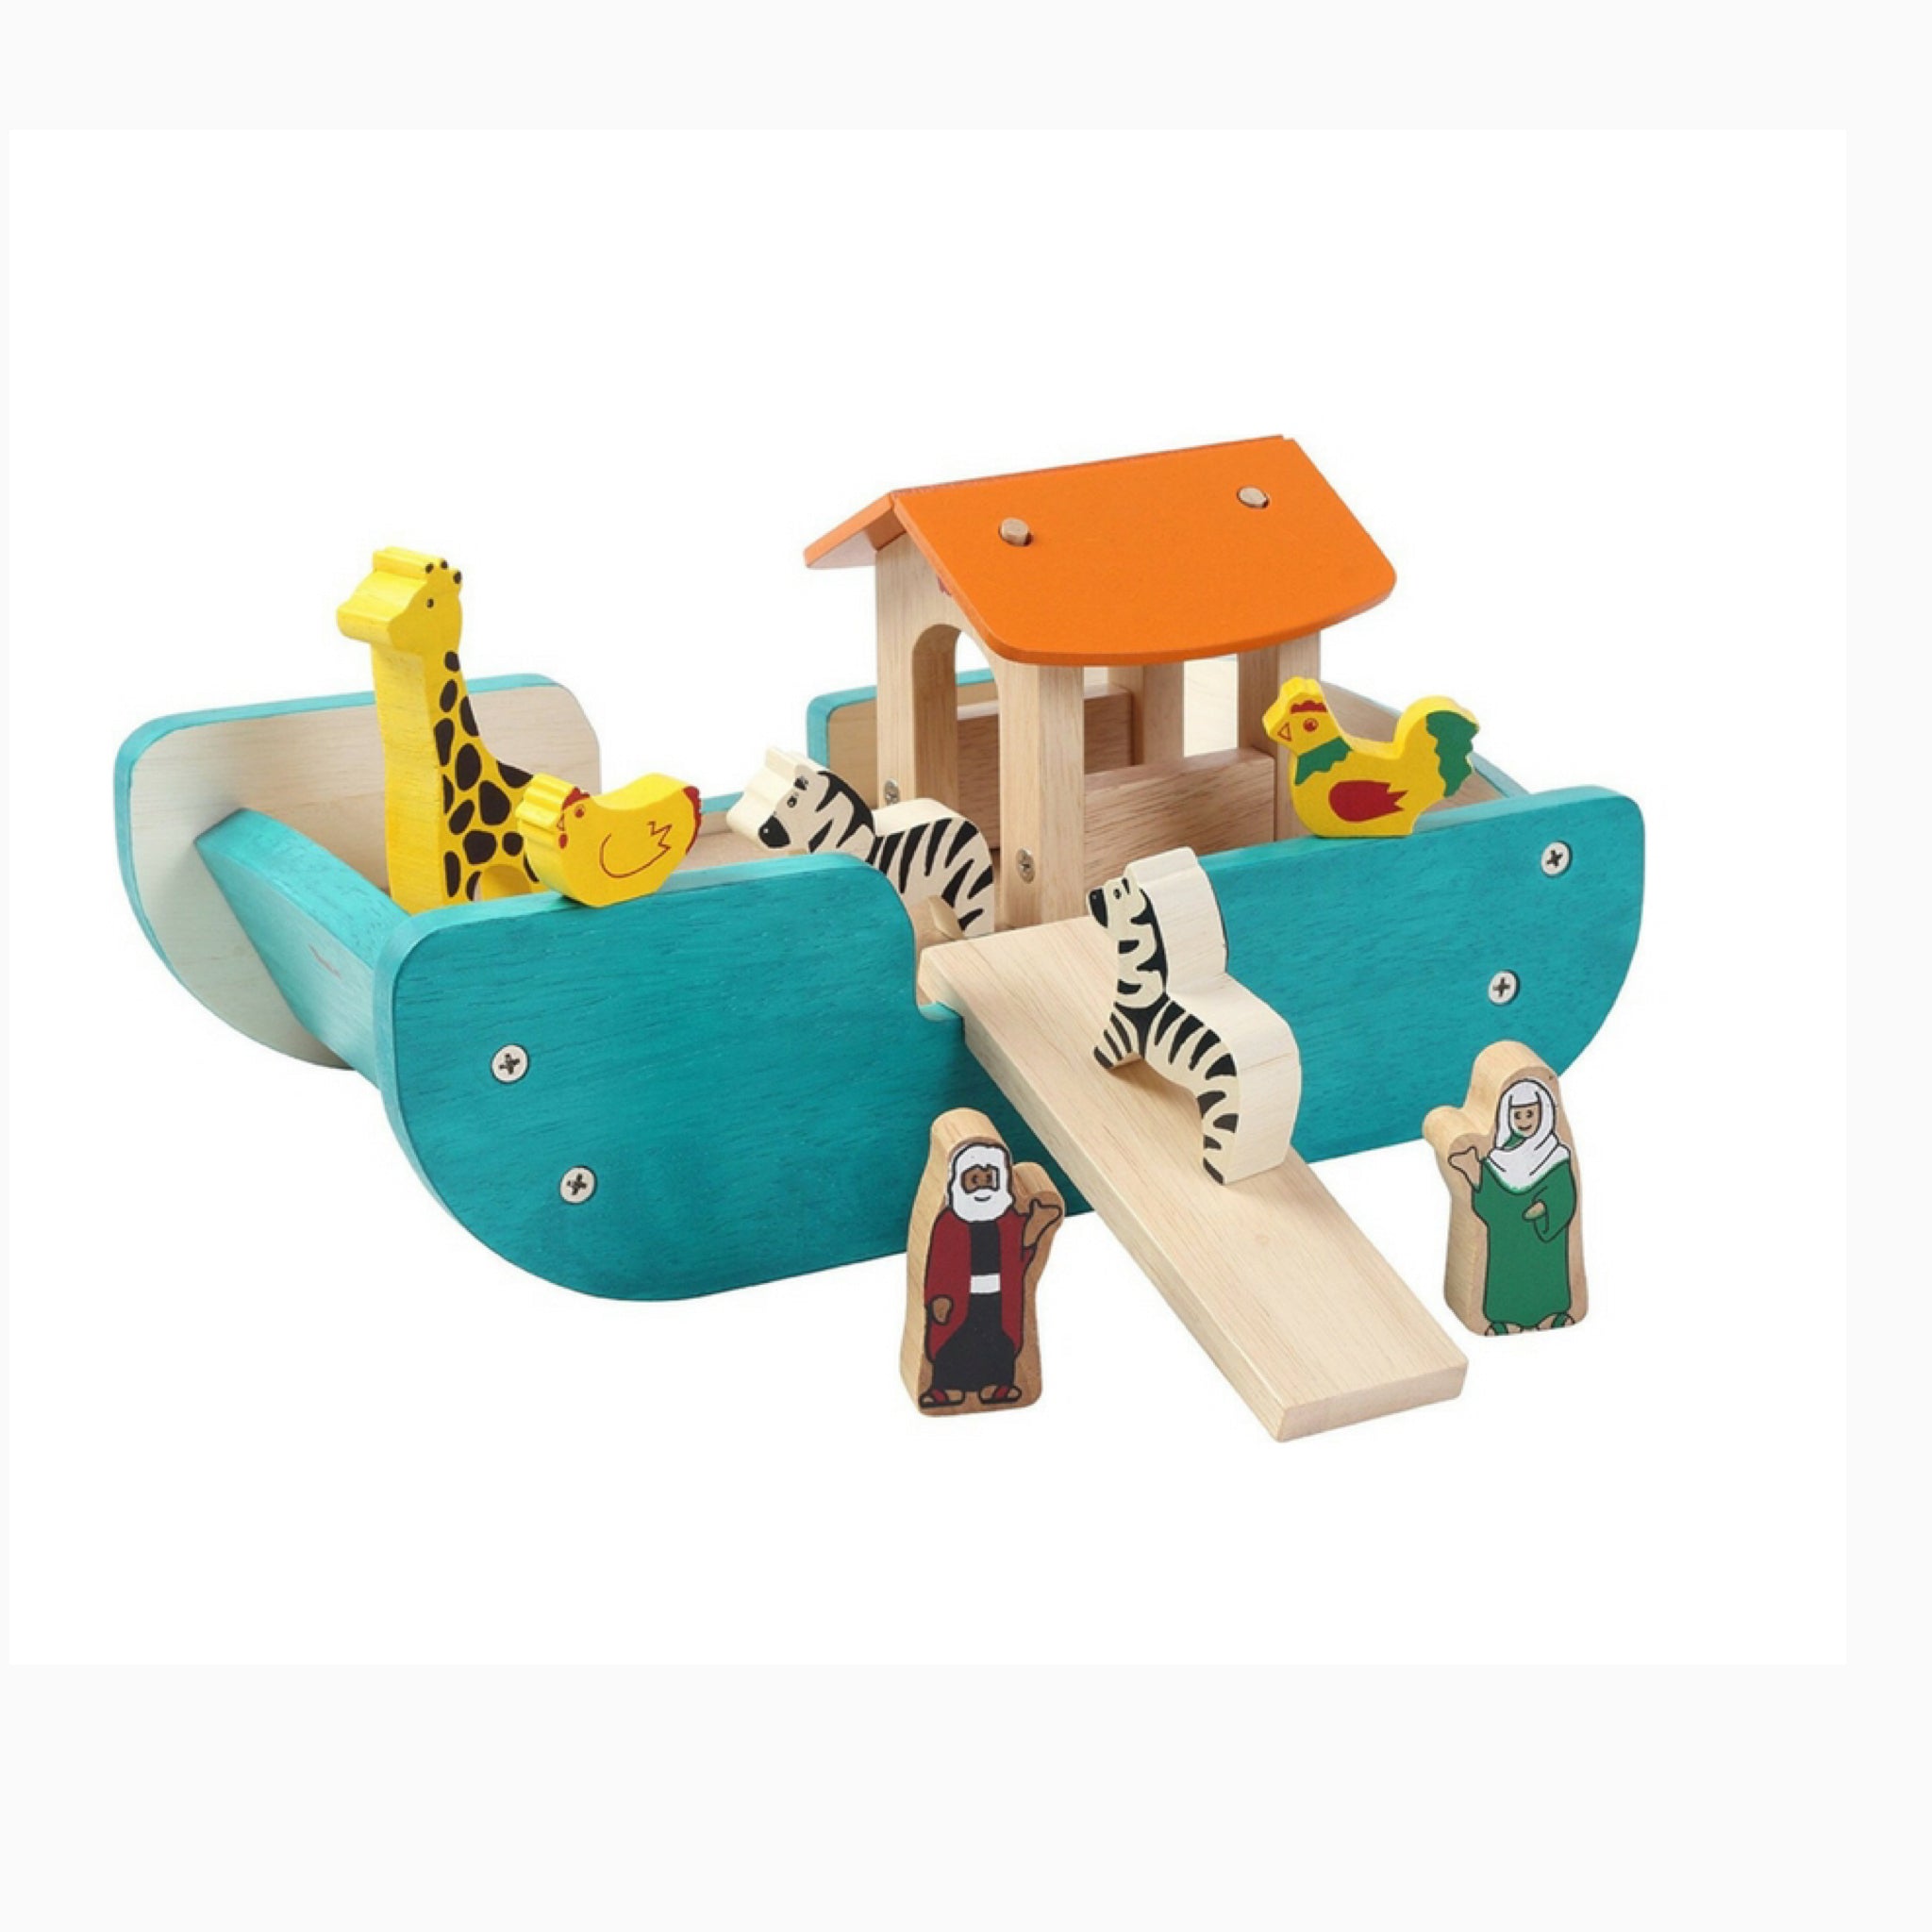 Noah's Ark Sort & Play Set